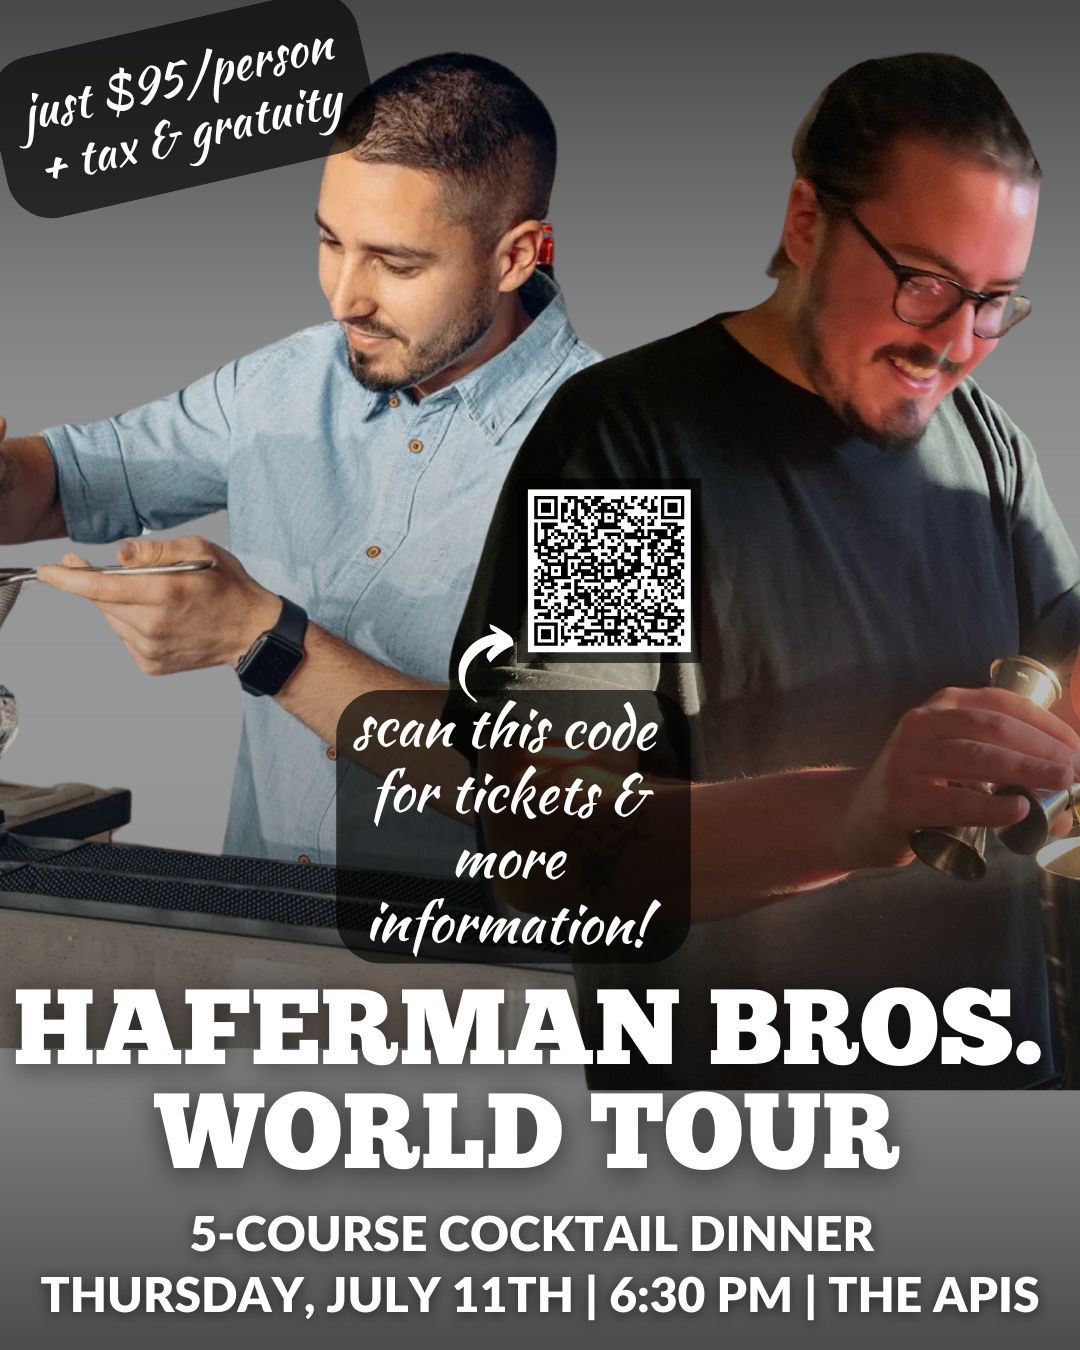 Haferman Bros. World Tour - Cocktail Dinner at The Apis feat. Justin & Trevor